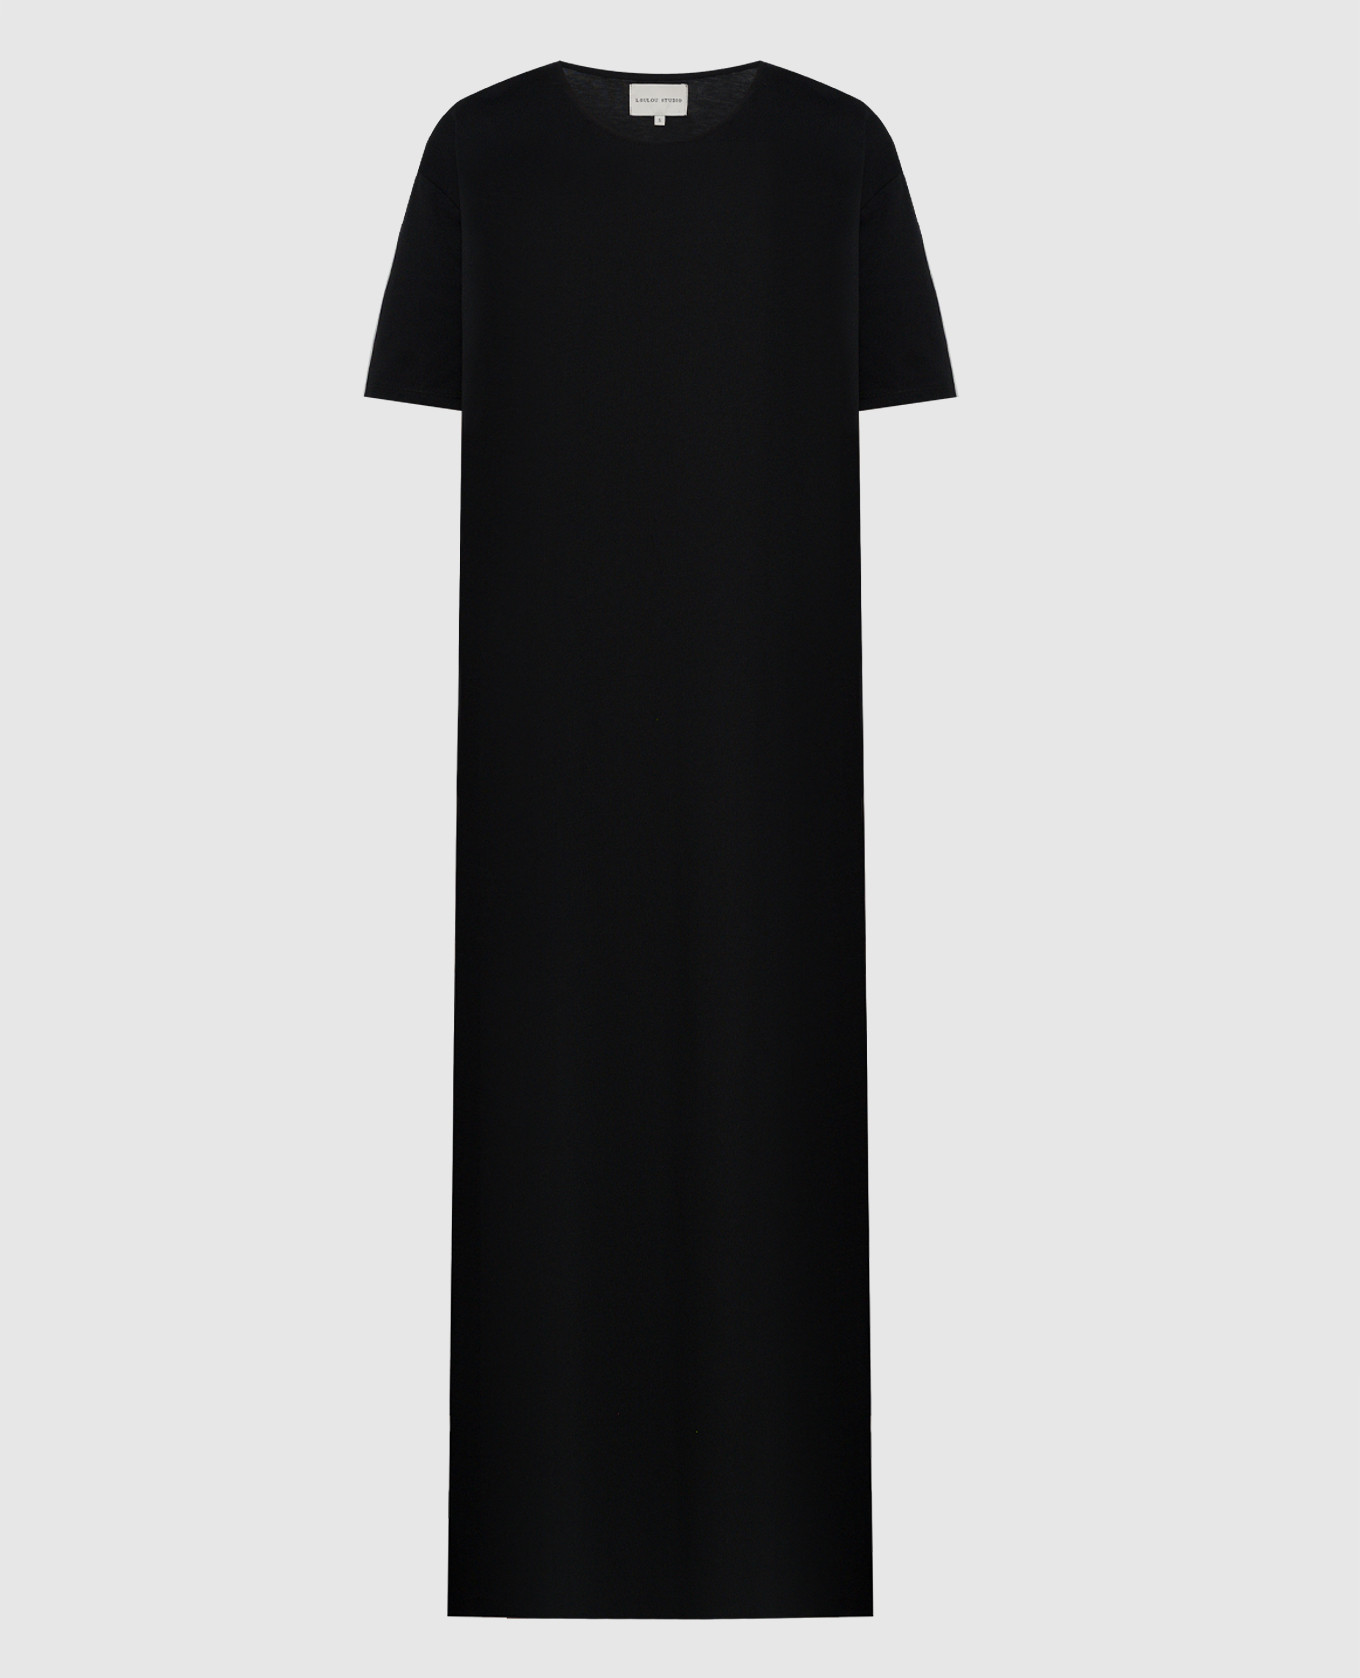 SARUE black midi dress with logo embroidery